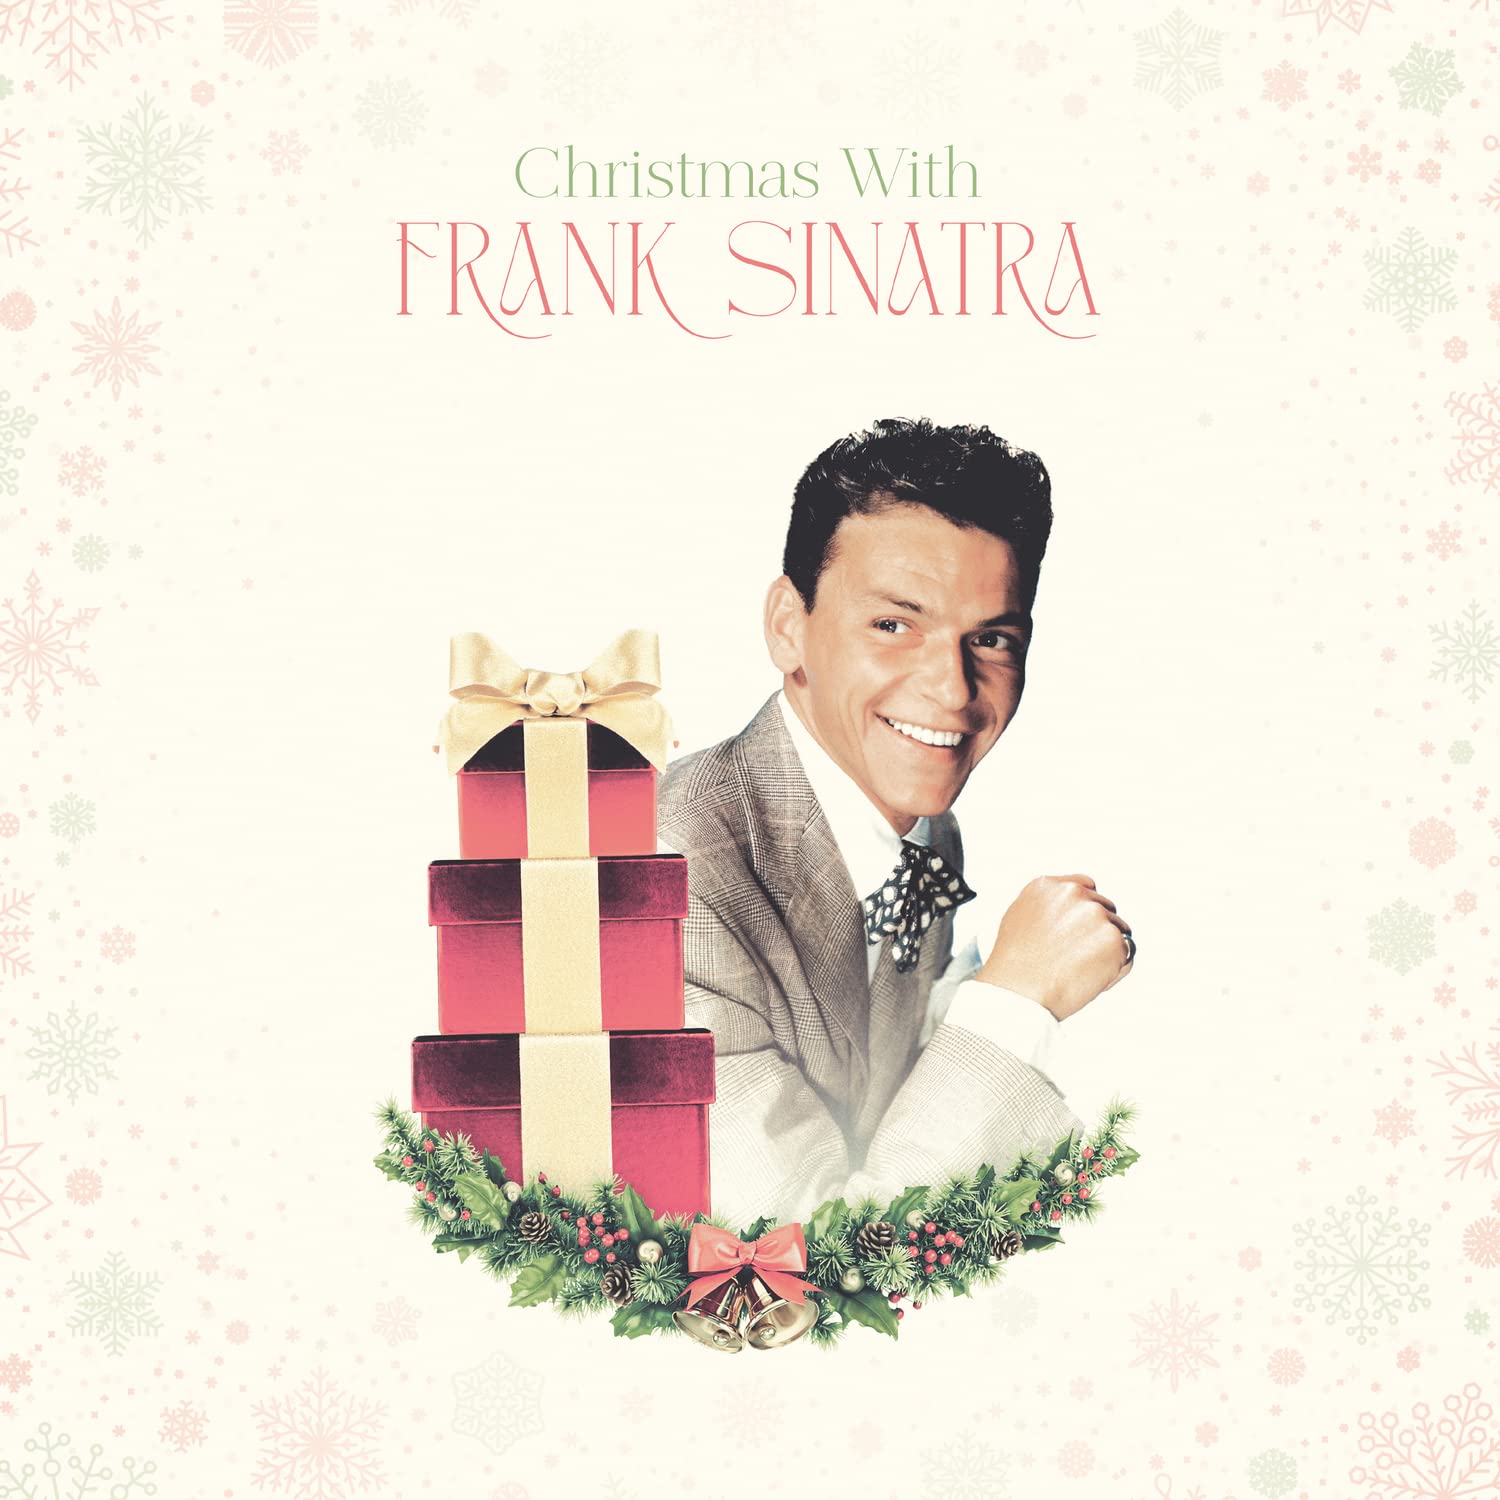 Frank Sinatra - Christmas With Frank Sinatra [White Vinyl]